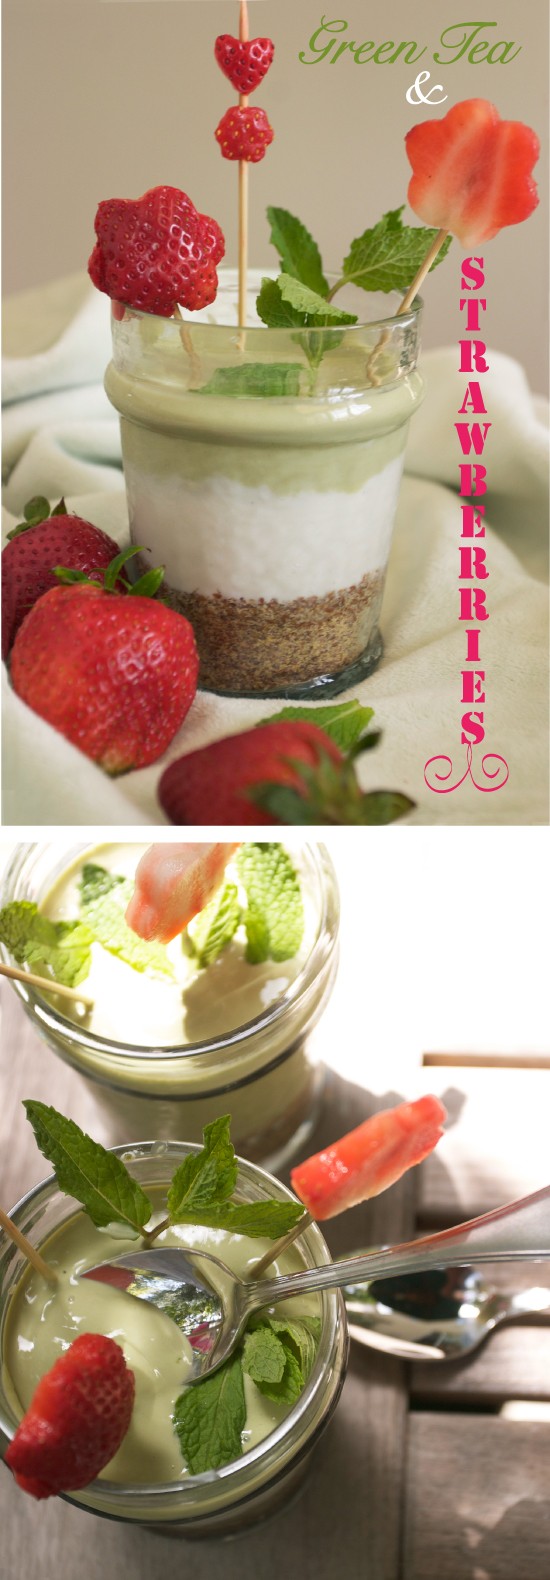 Green Tea Yogurt Parfait with Strawberries and Mint